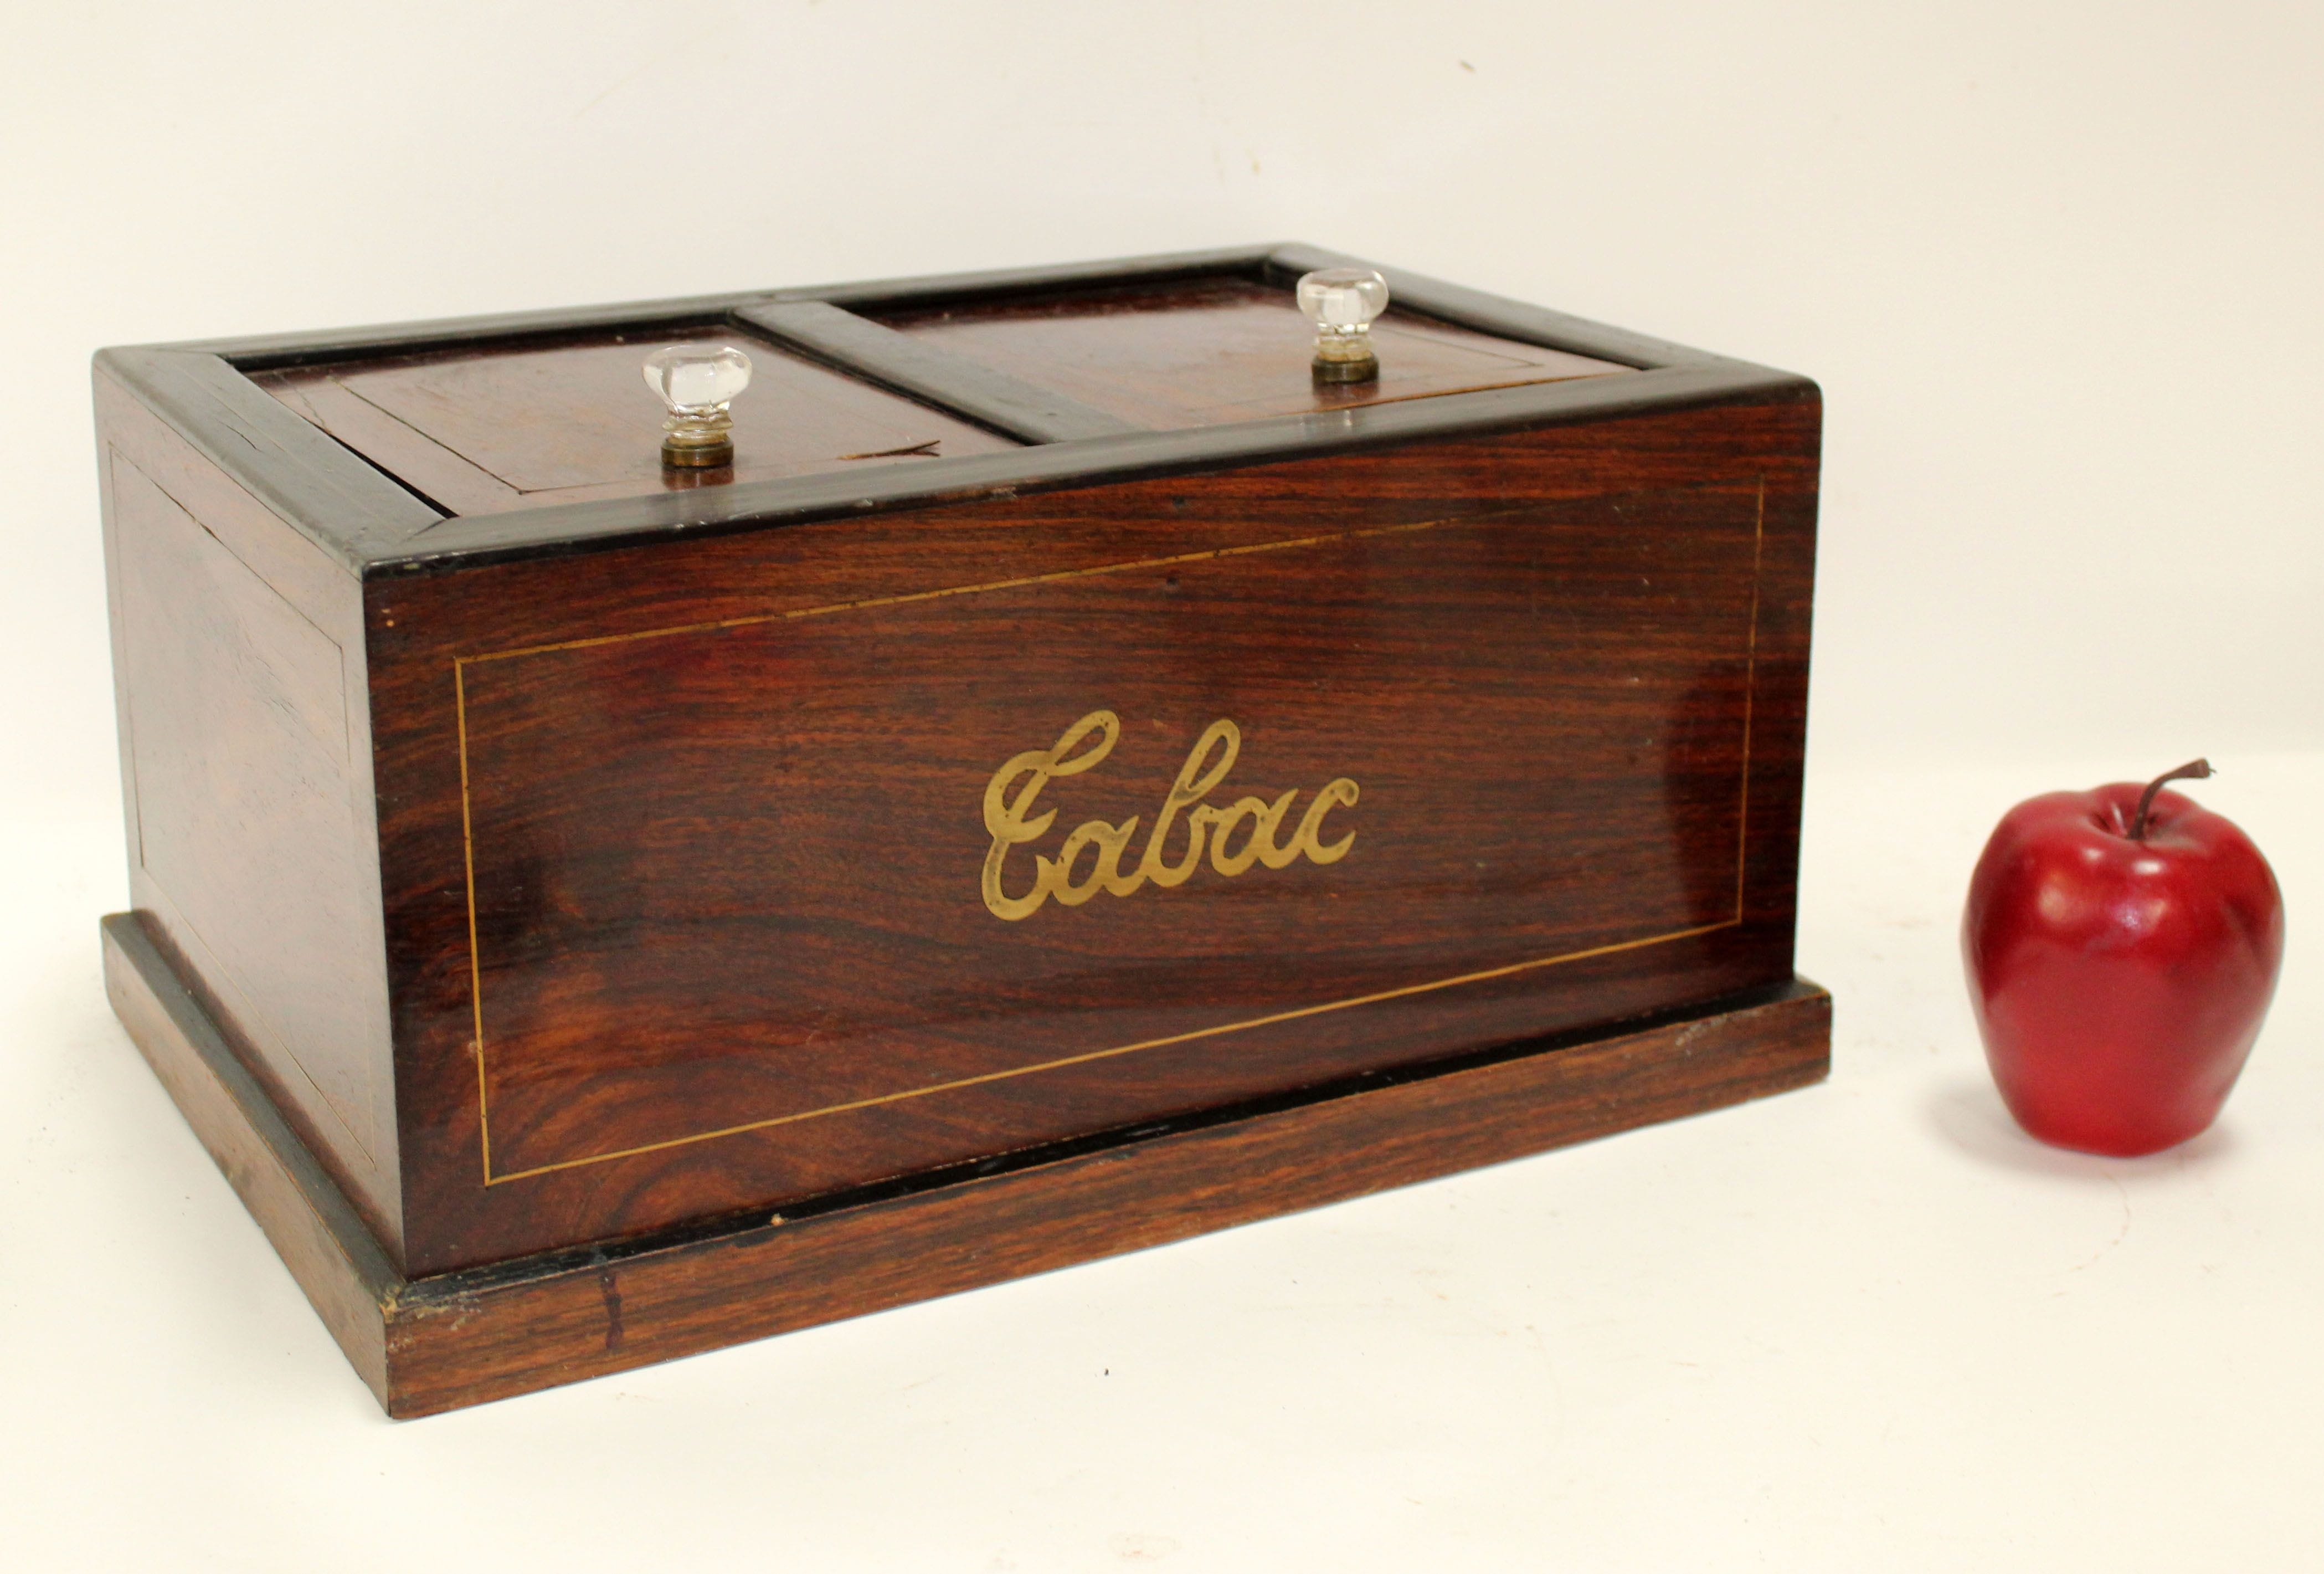 Antique French tobacco box